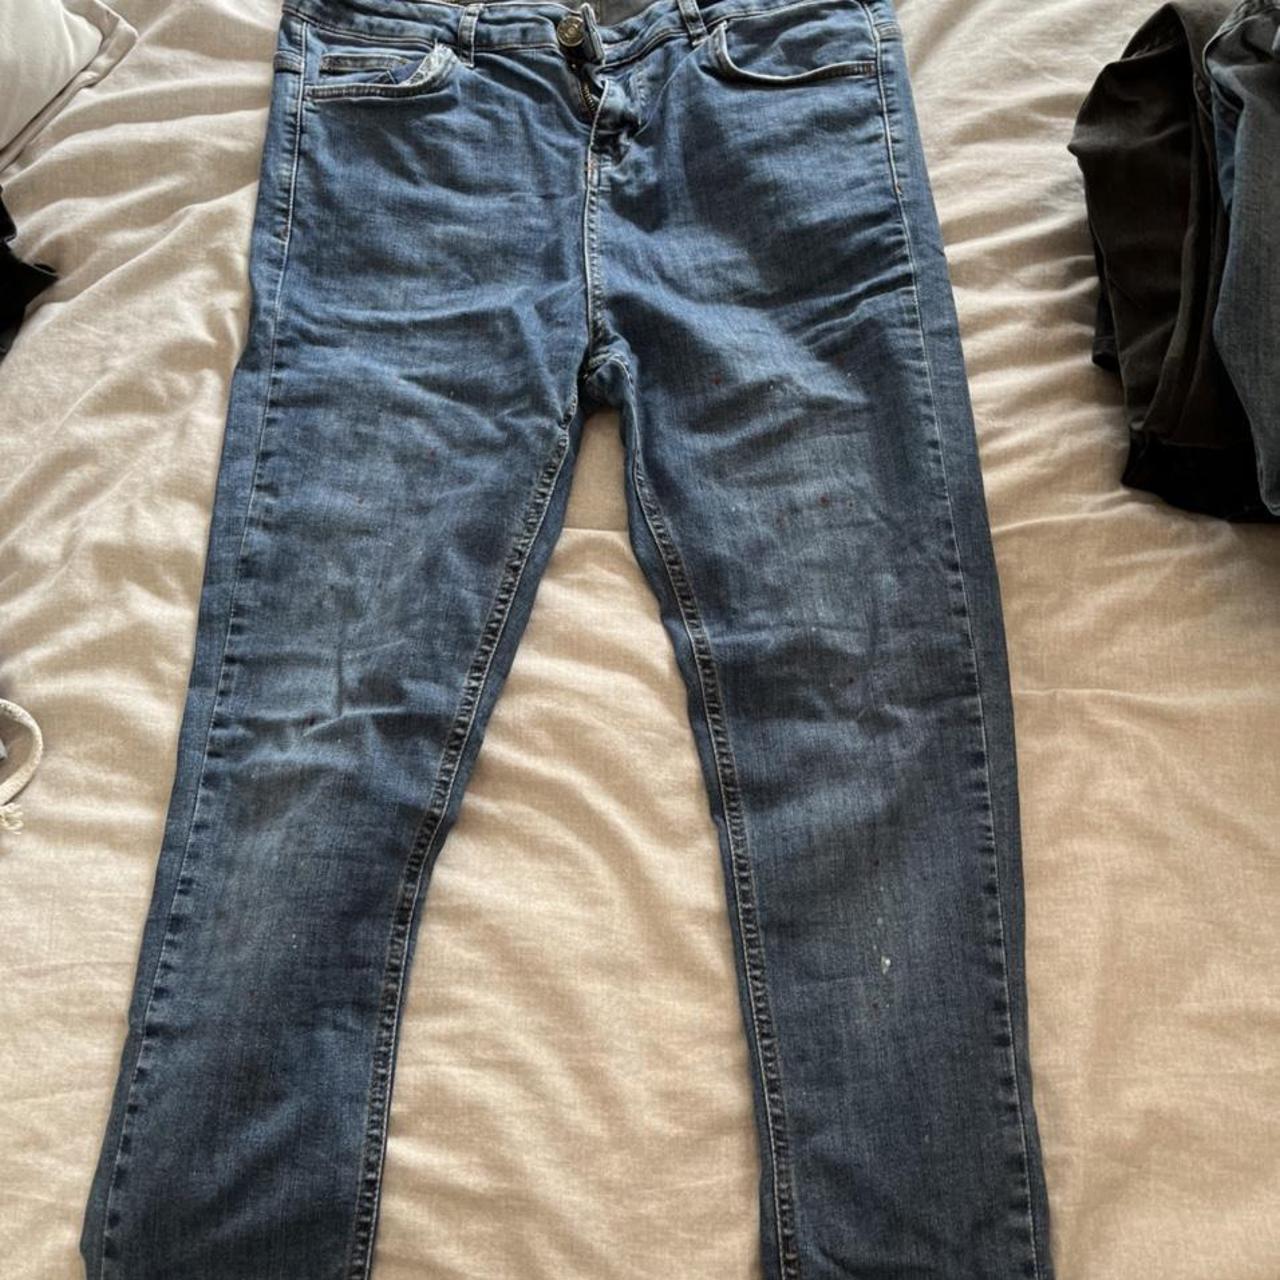 Hera skinny jeans with light paint splatter, denim.... - Depop